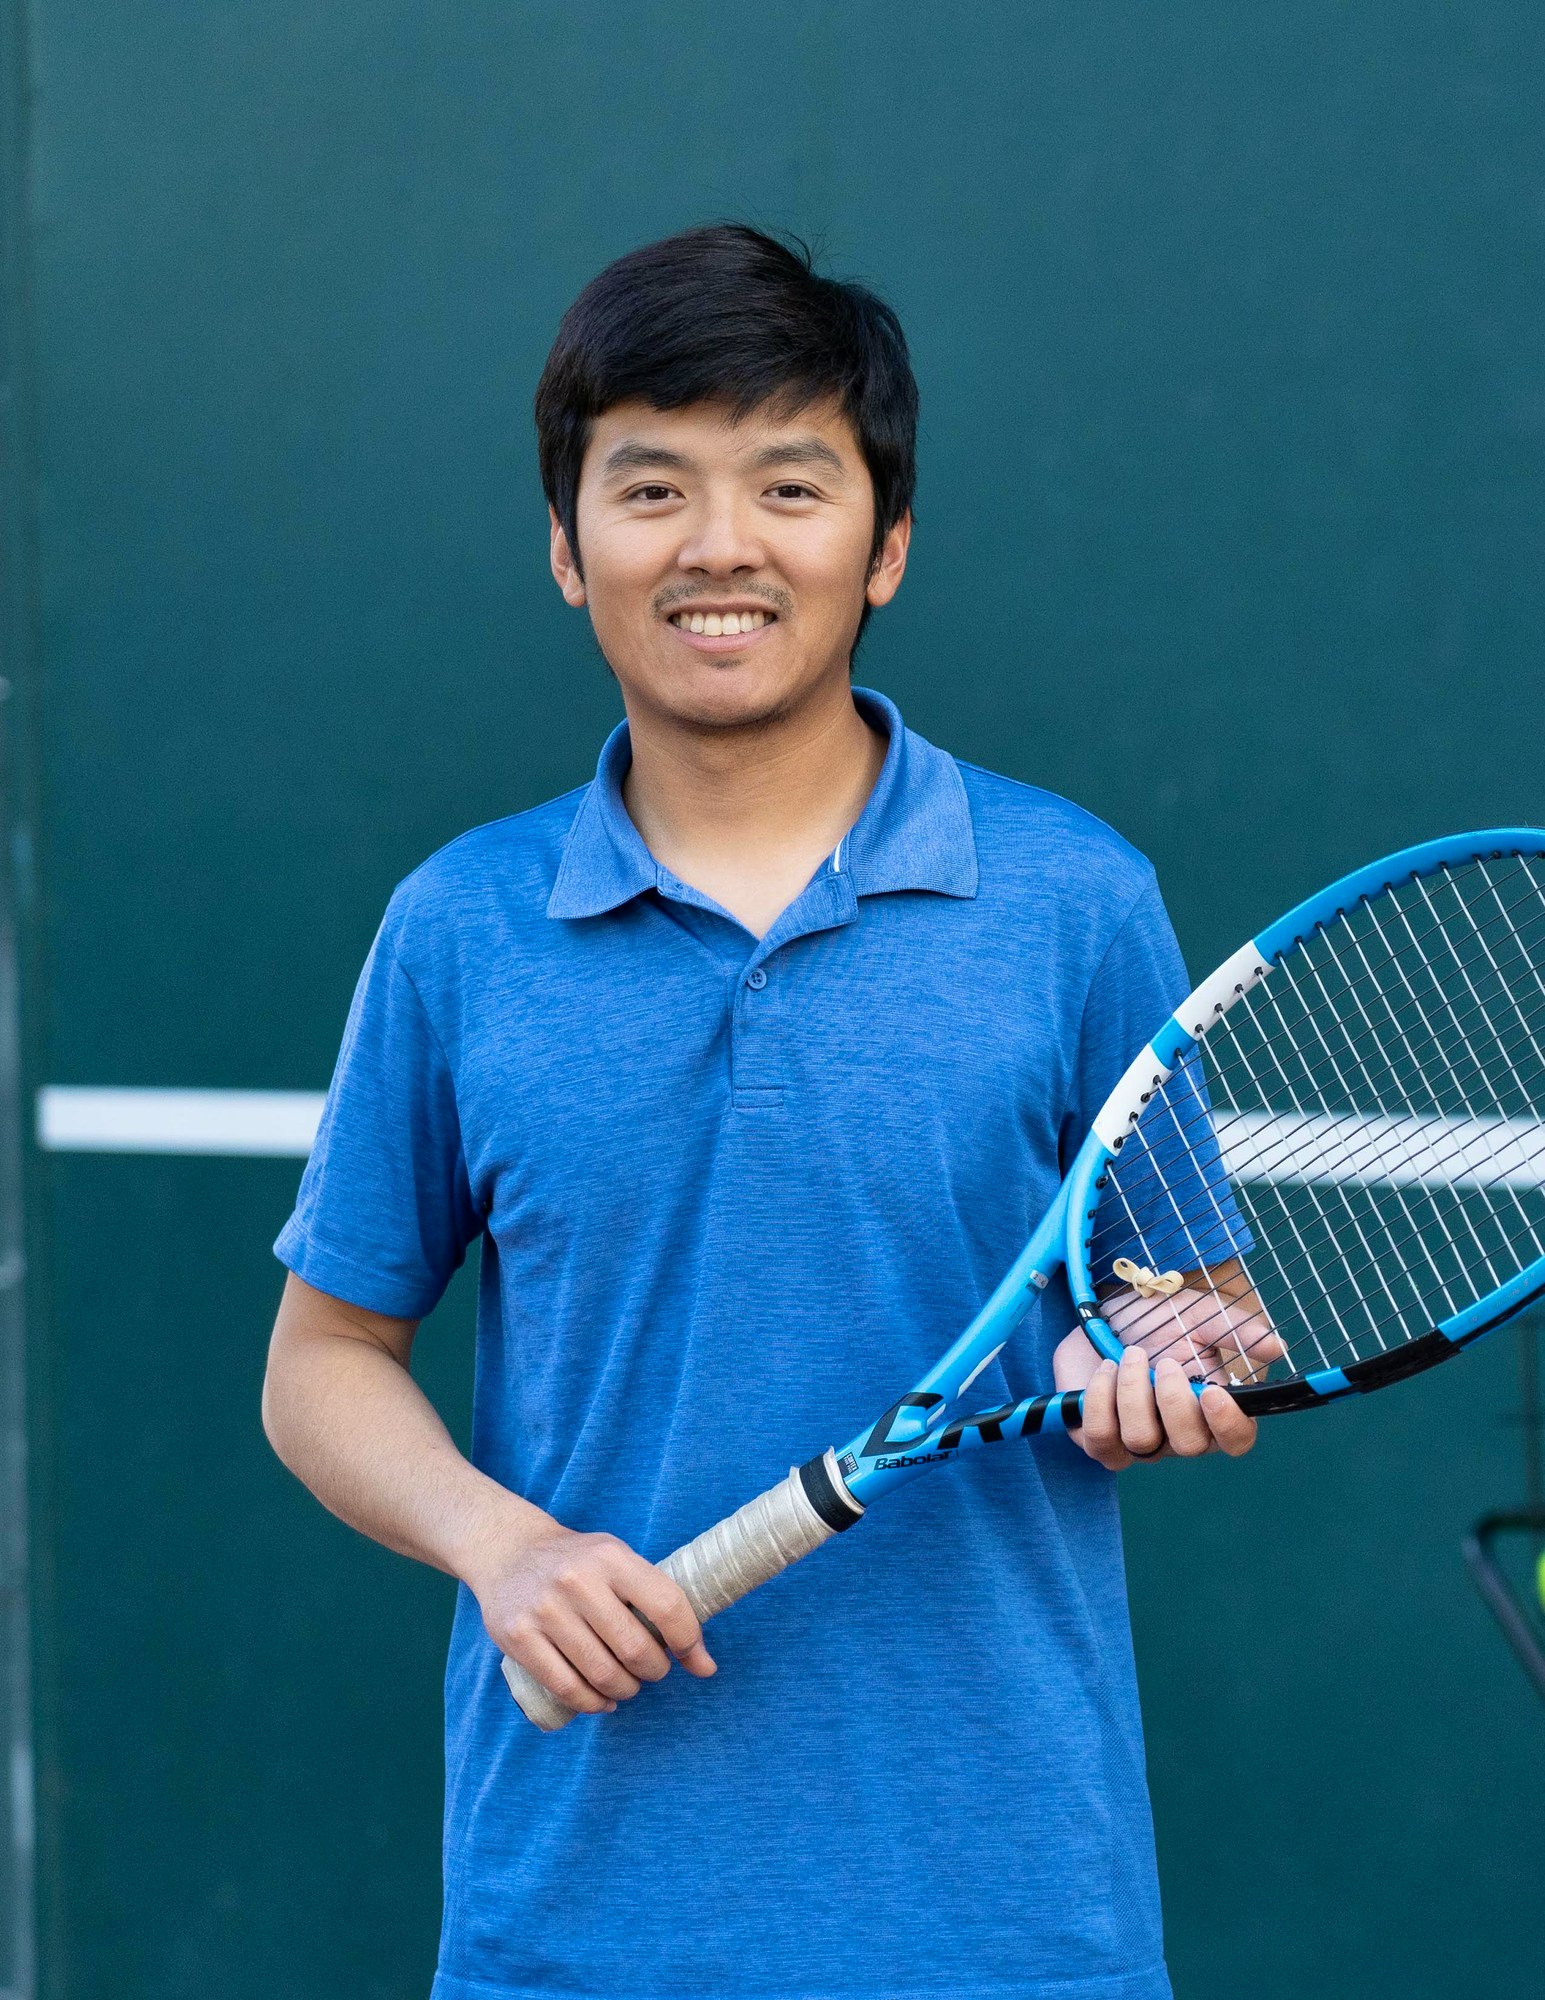 Chris Y. teaches tennis lessons in San Jose, CA